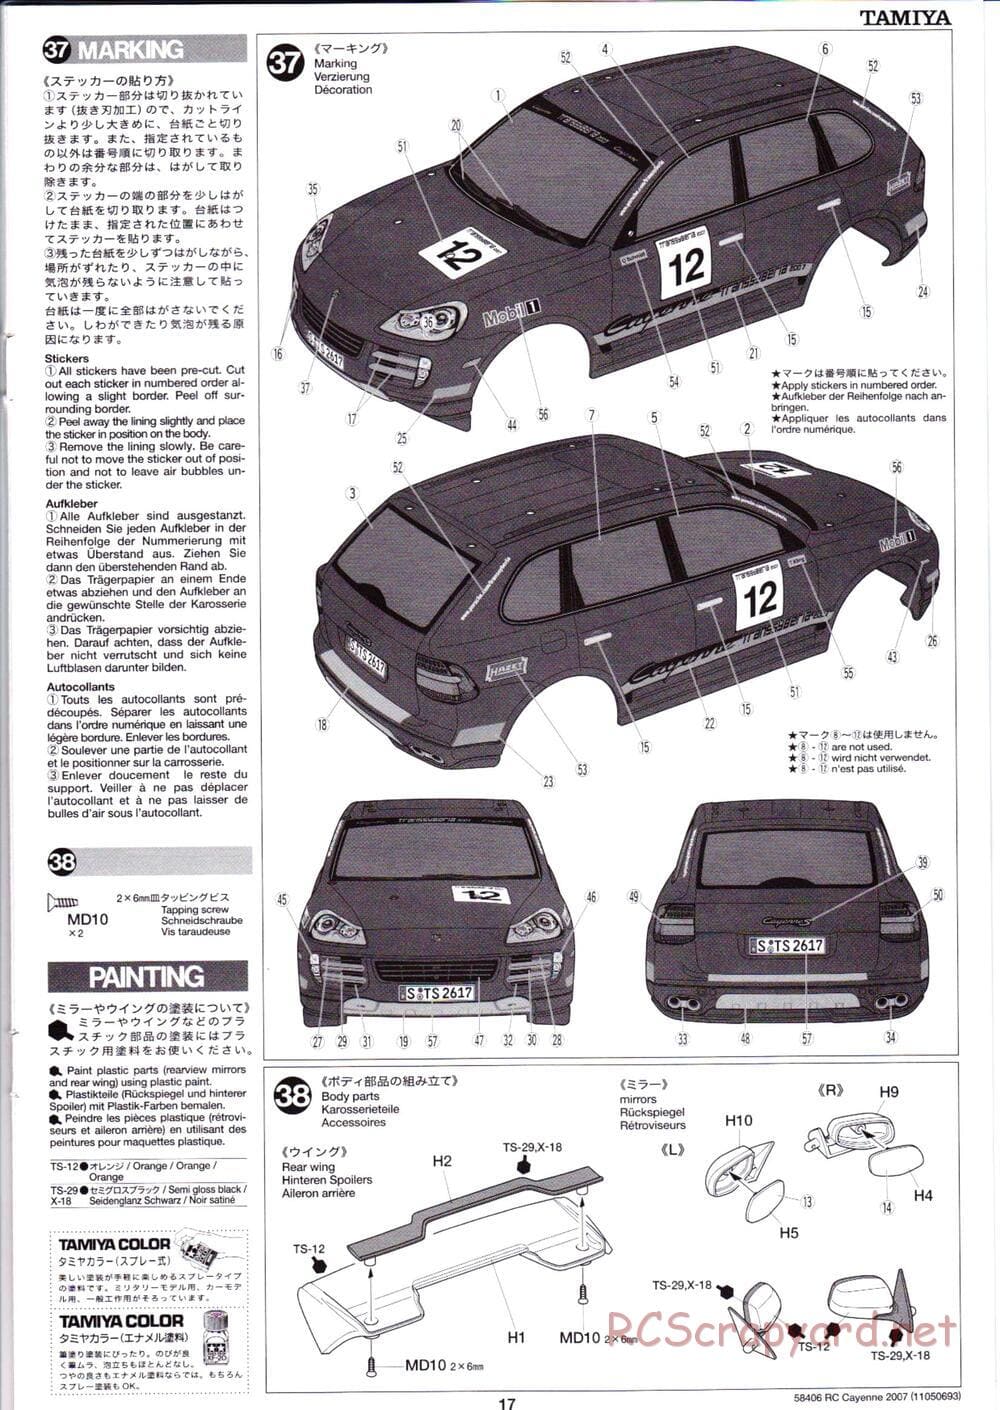 Tamiya - Cayenne S Transsyberia 2007 Chassis - Manual - Page 17